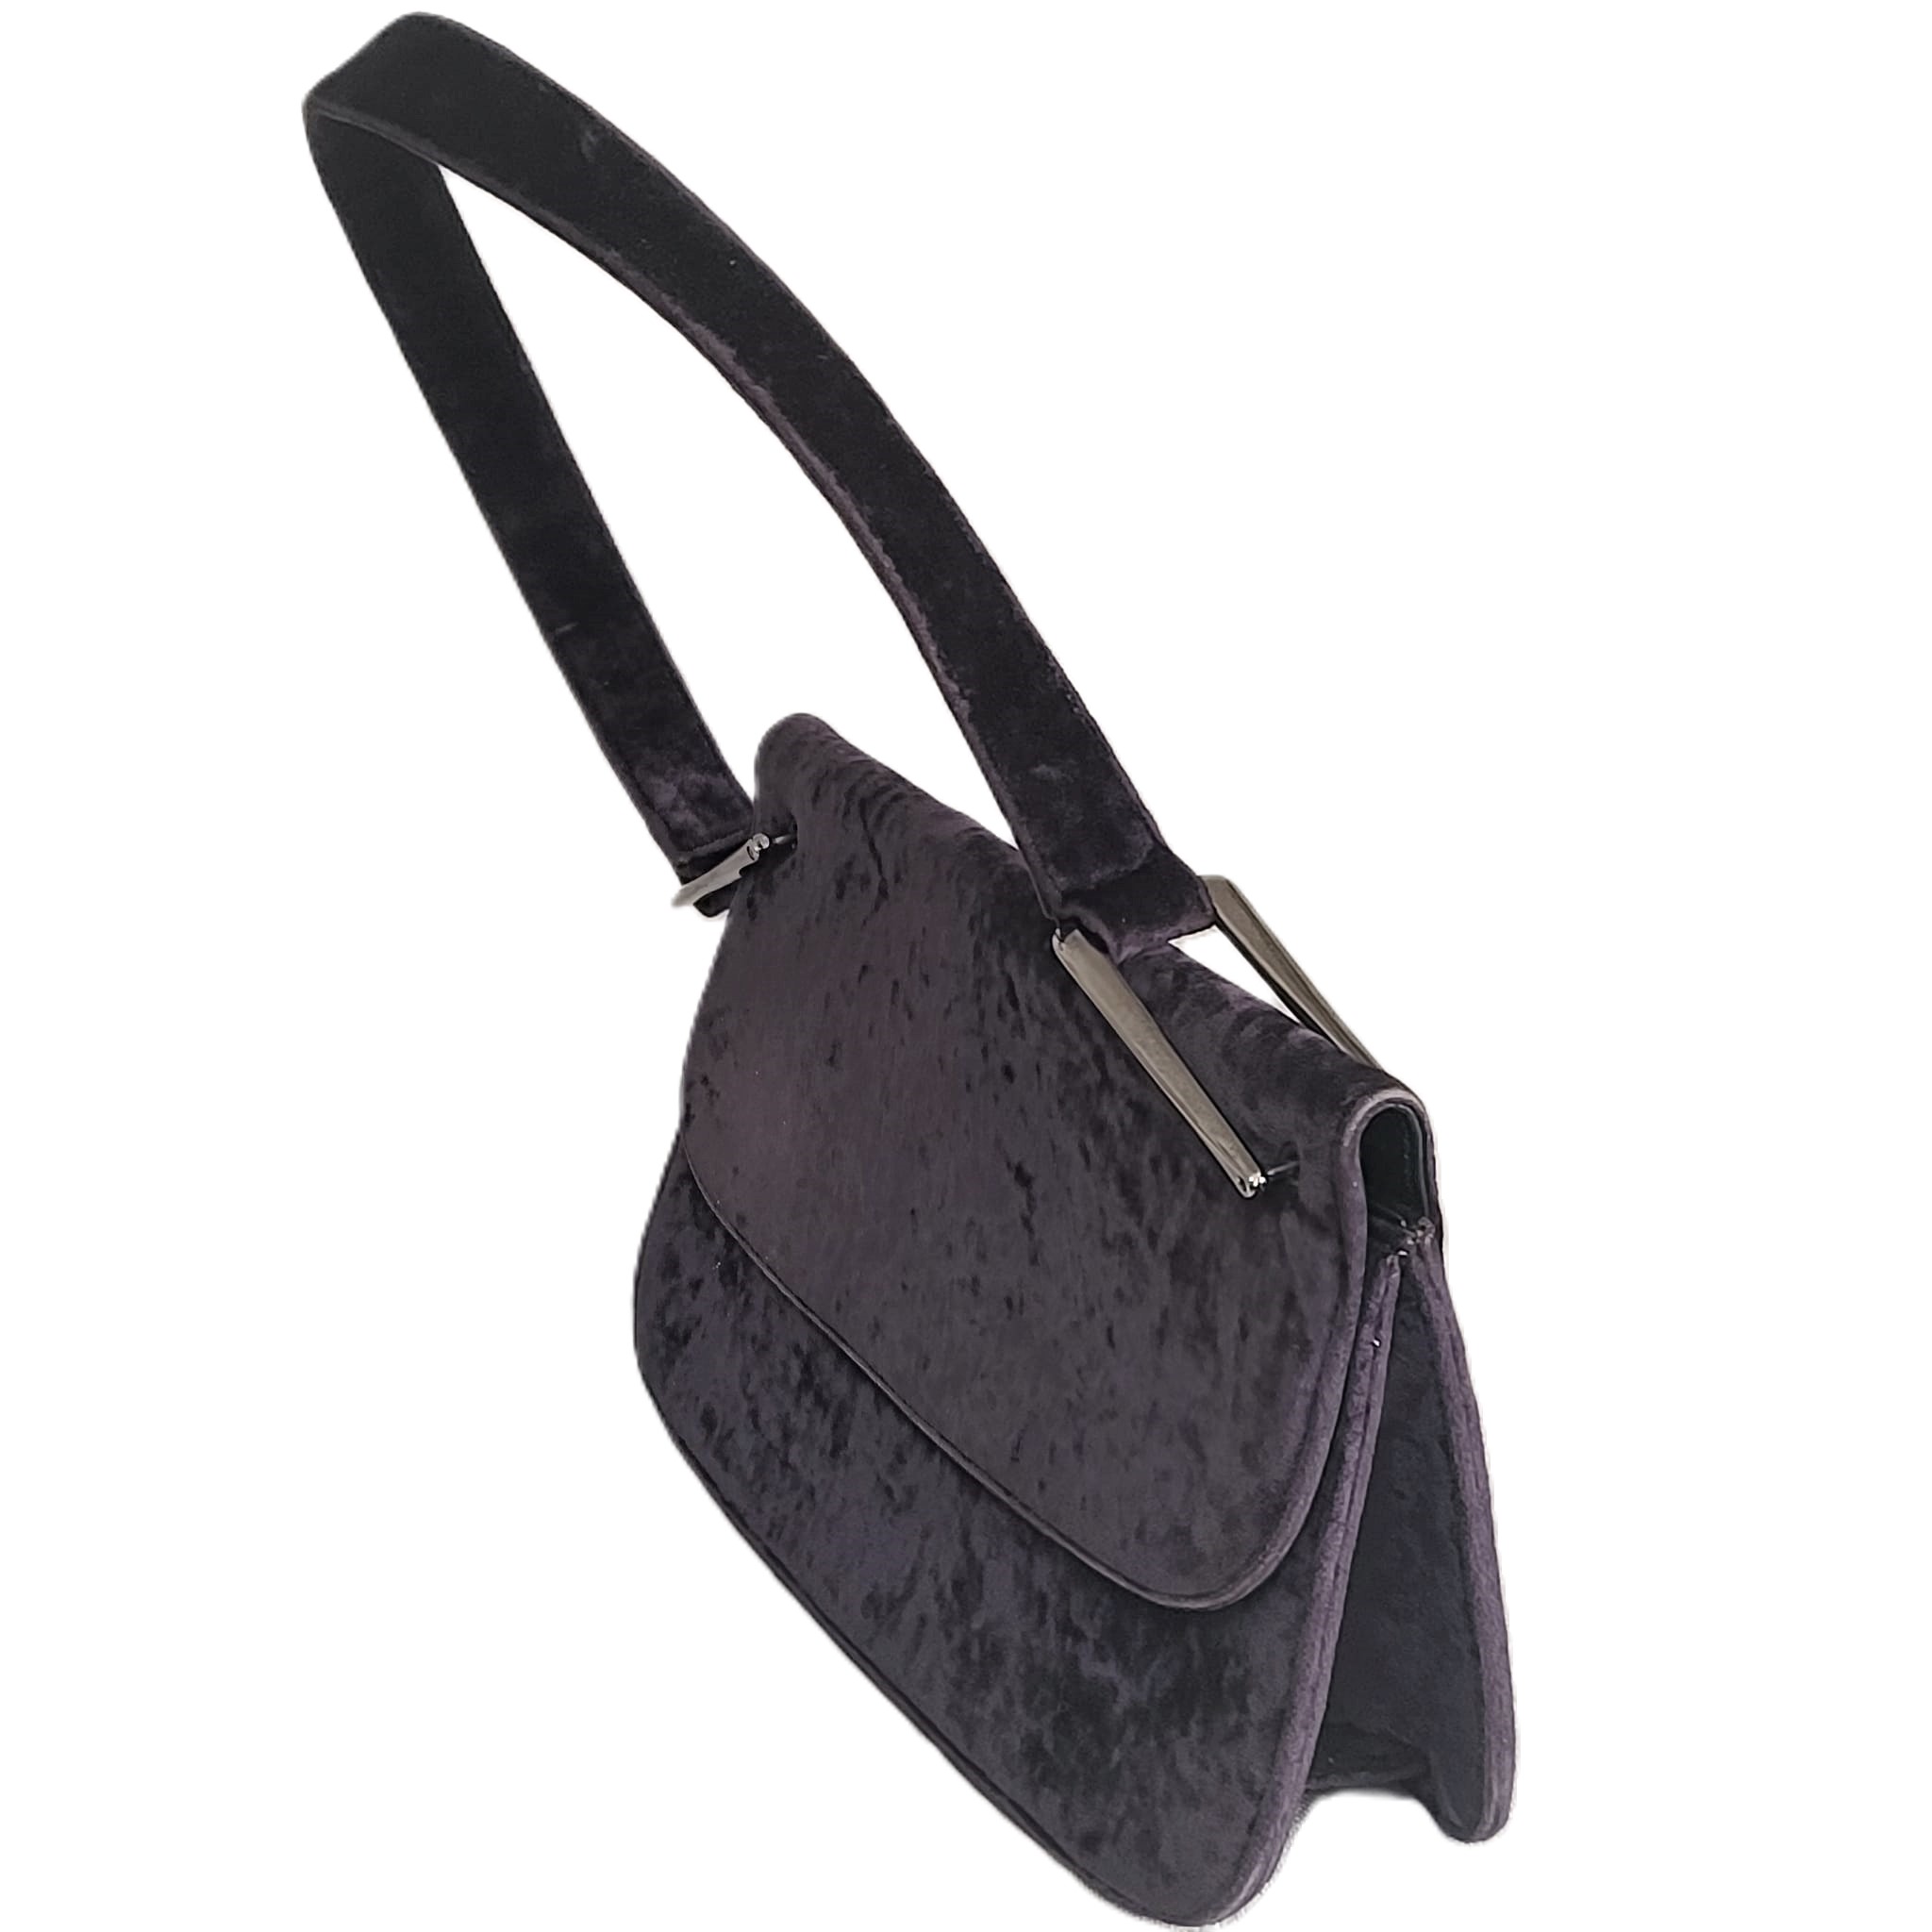 Designer Amaranti brushed purple velvet vintage handbag